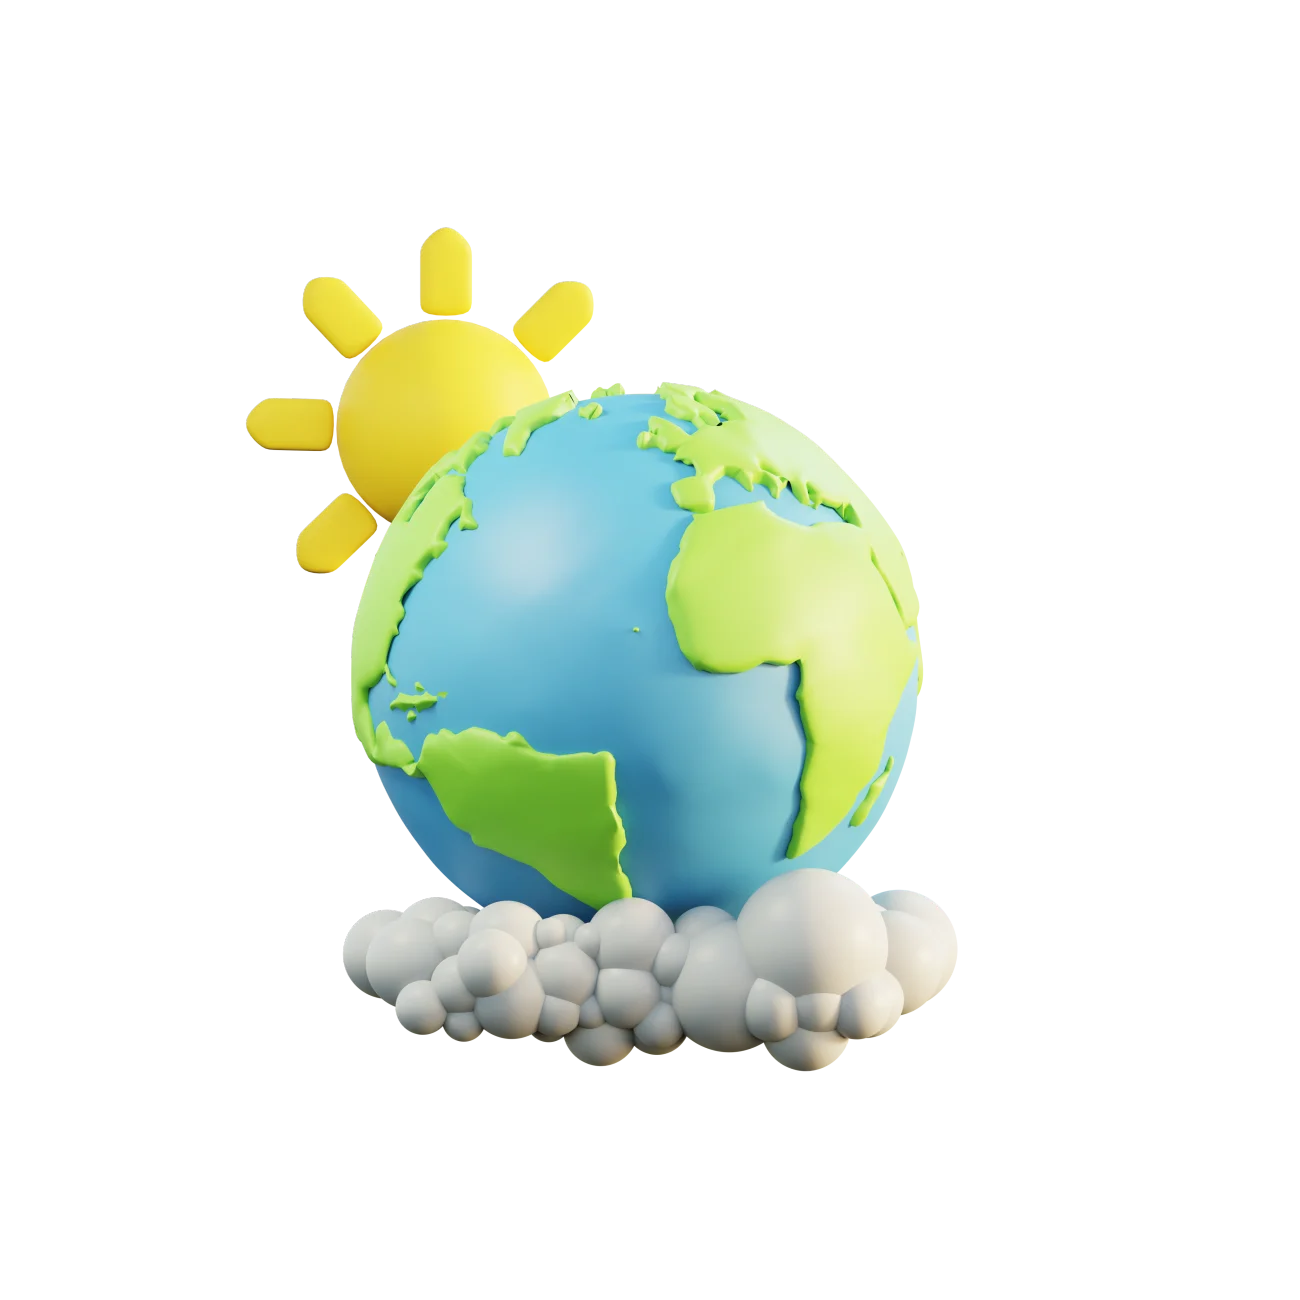 天气生活用品3D图标模型30款 3D Icons for your next projects blender-3D/图标-到位啦UI